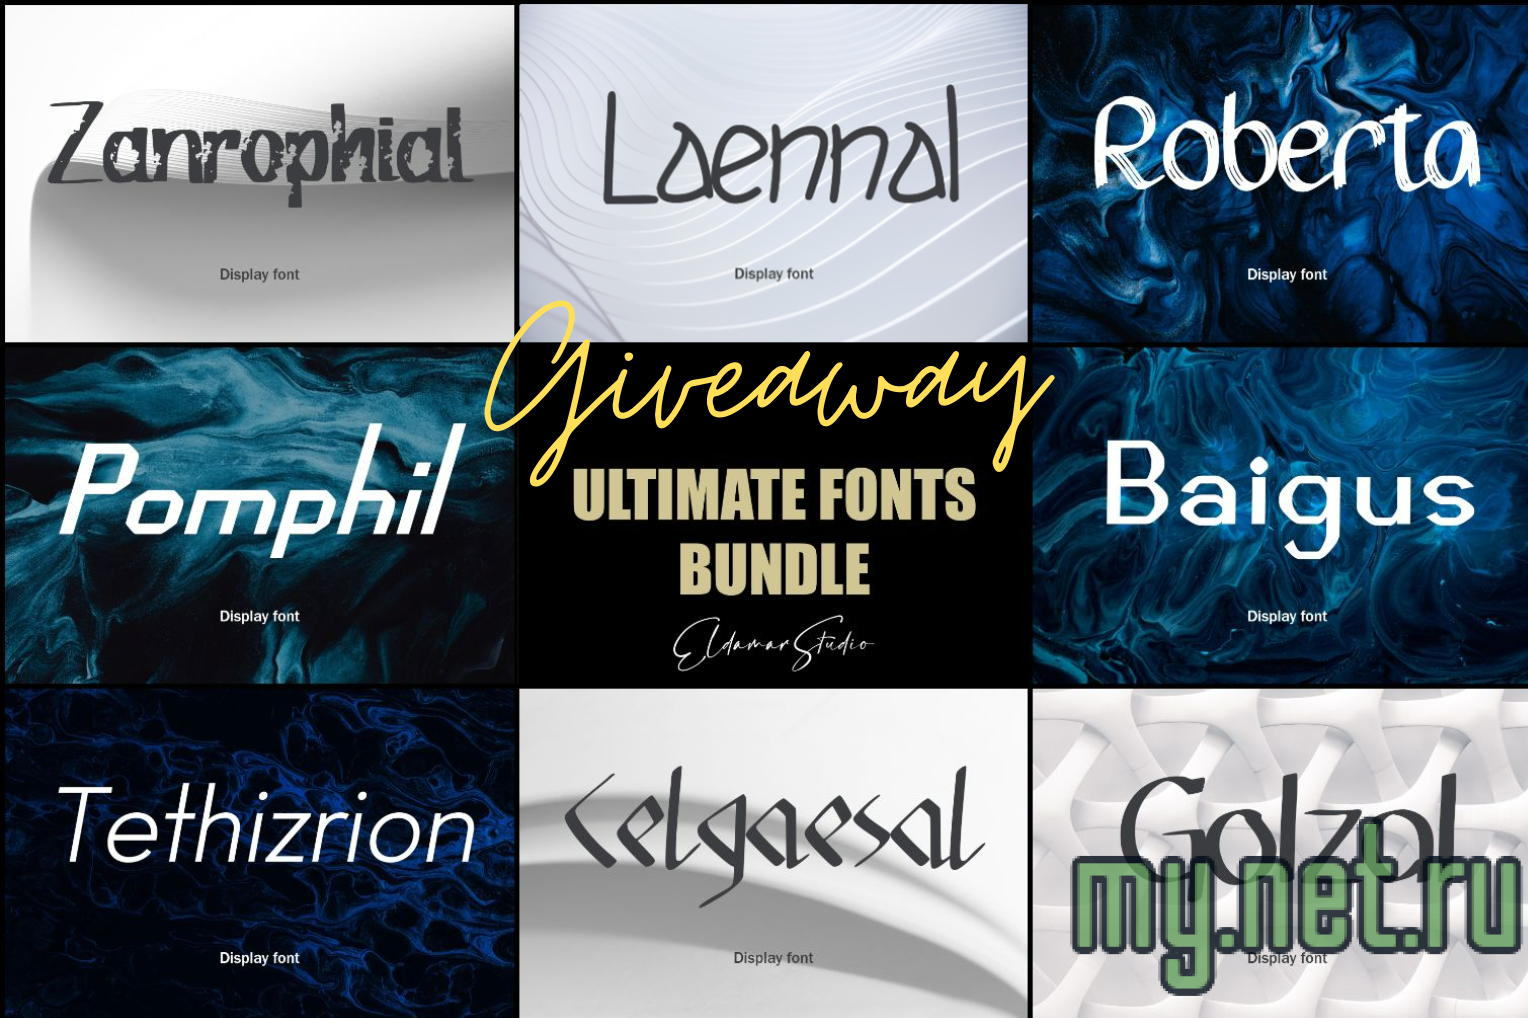 100-ultimate-fonts-bundle-giveaway.png